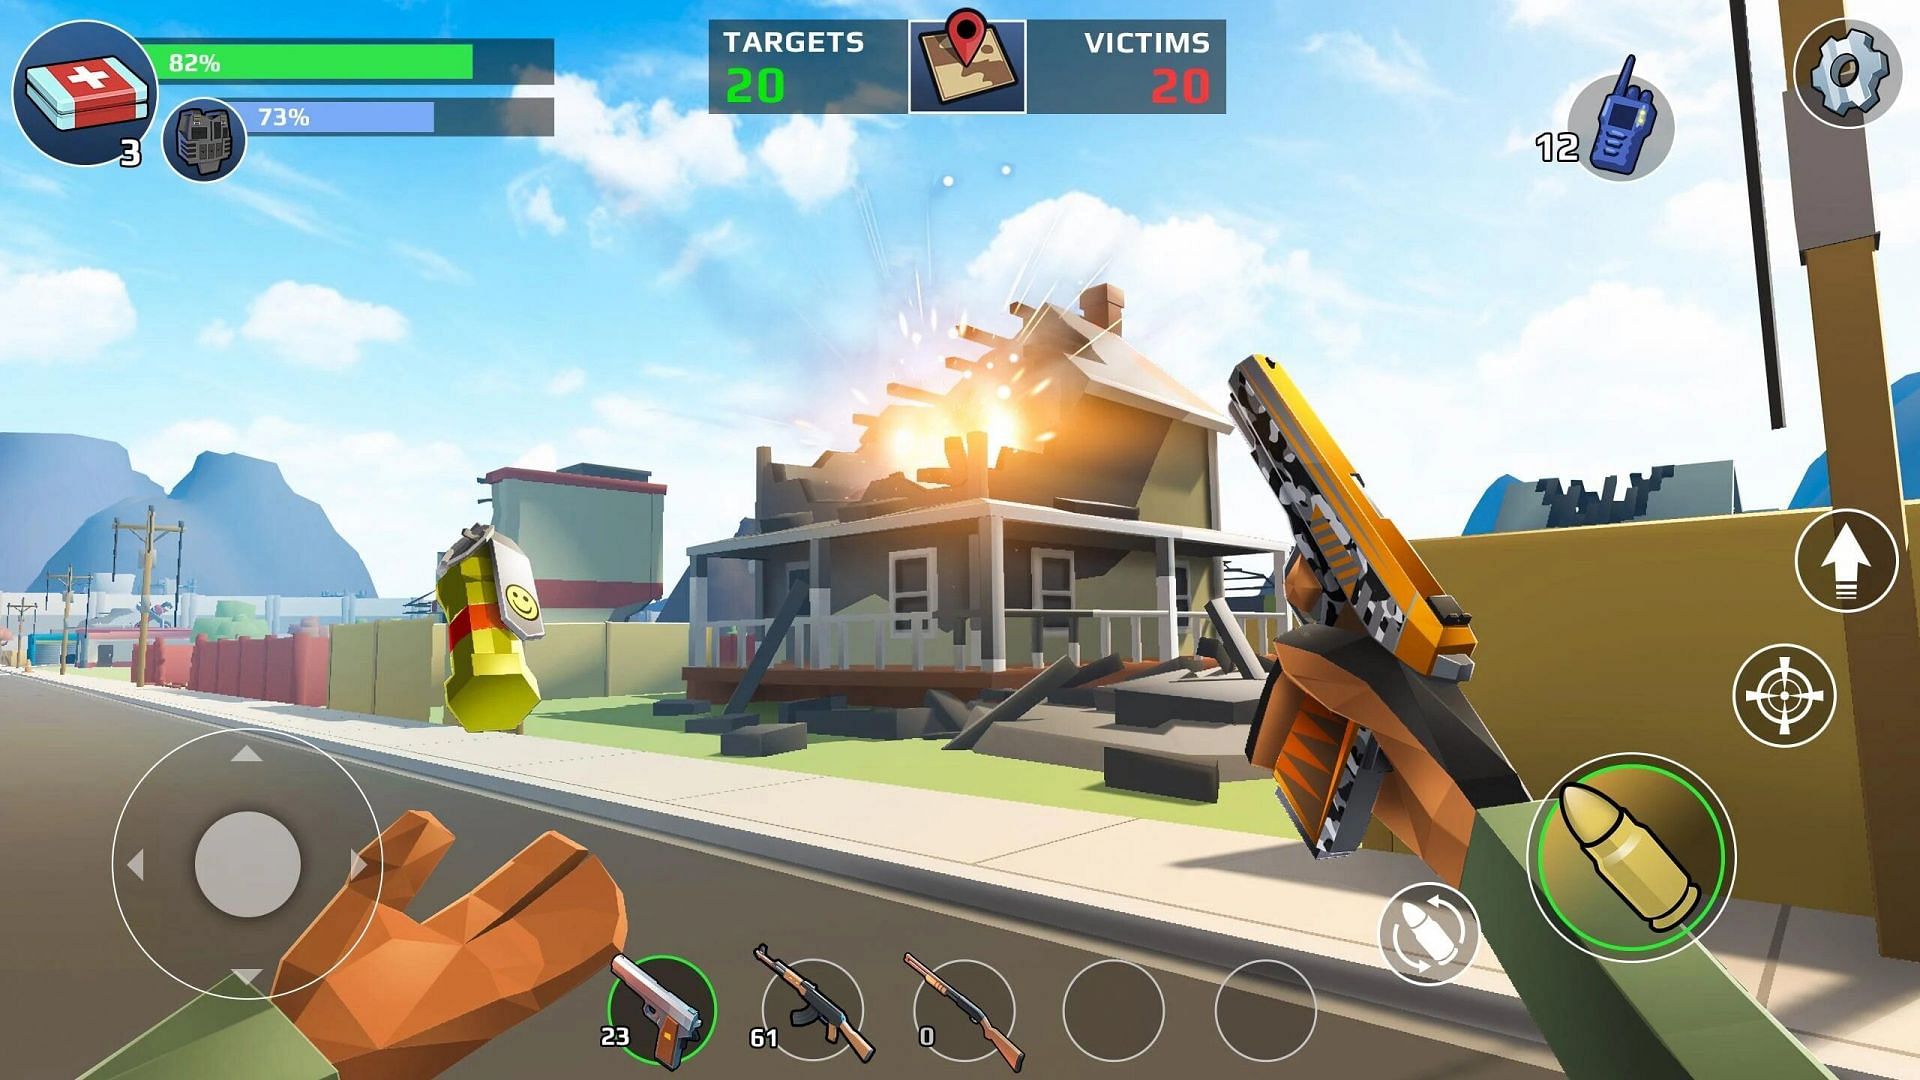 Battle Royale: FPS Shooter has pleasant graphics (Image via Azur Interactive Games)